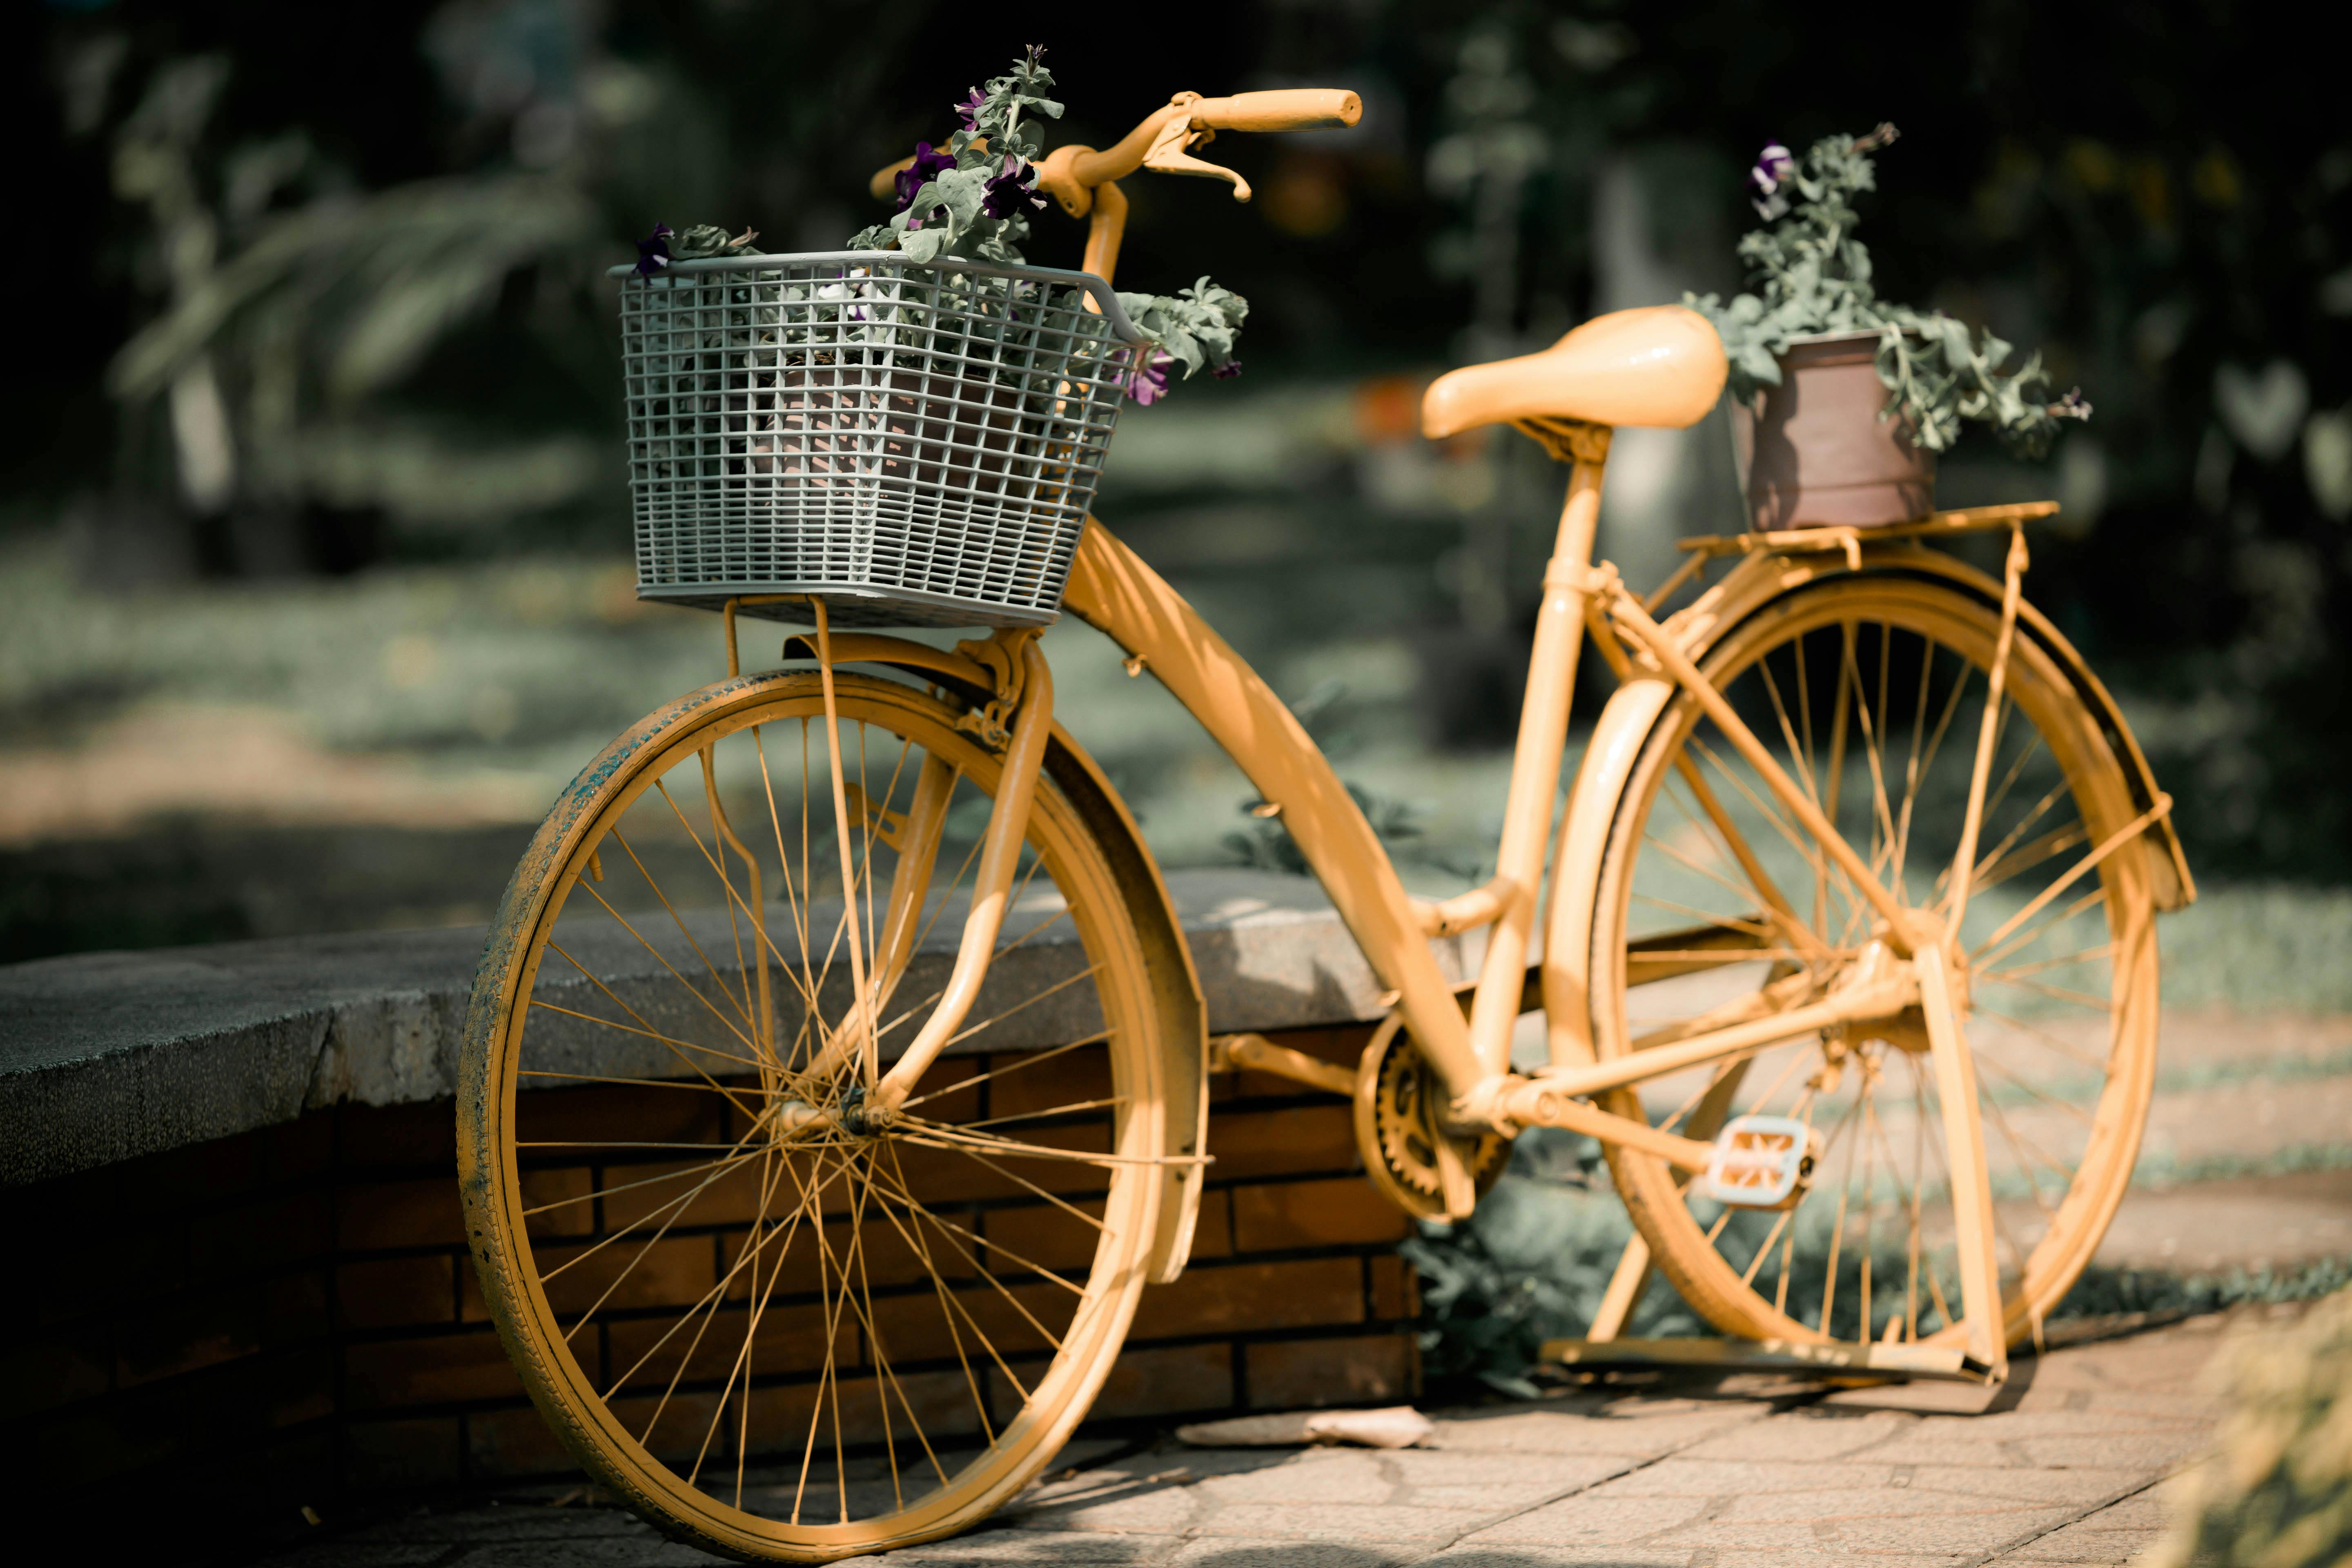 Brown Bike With Basket · Free Stock Photo